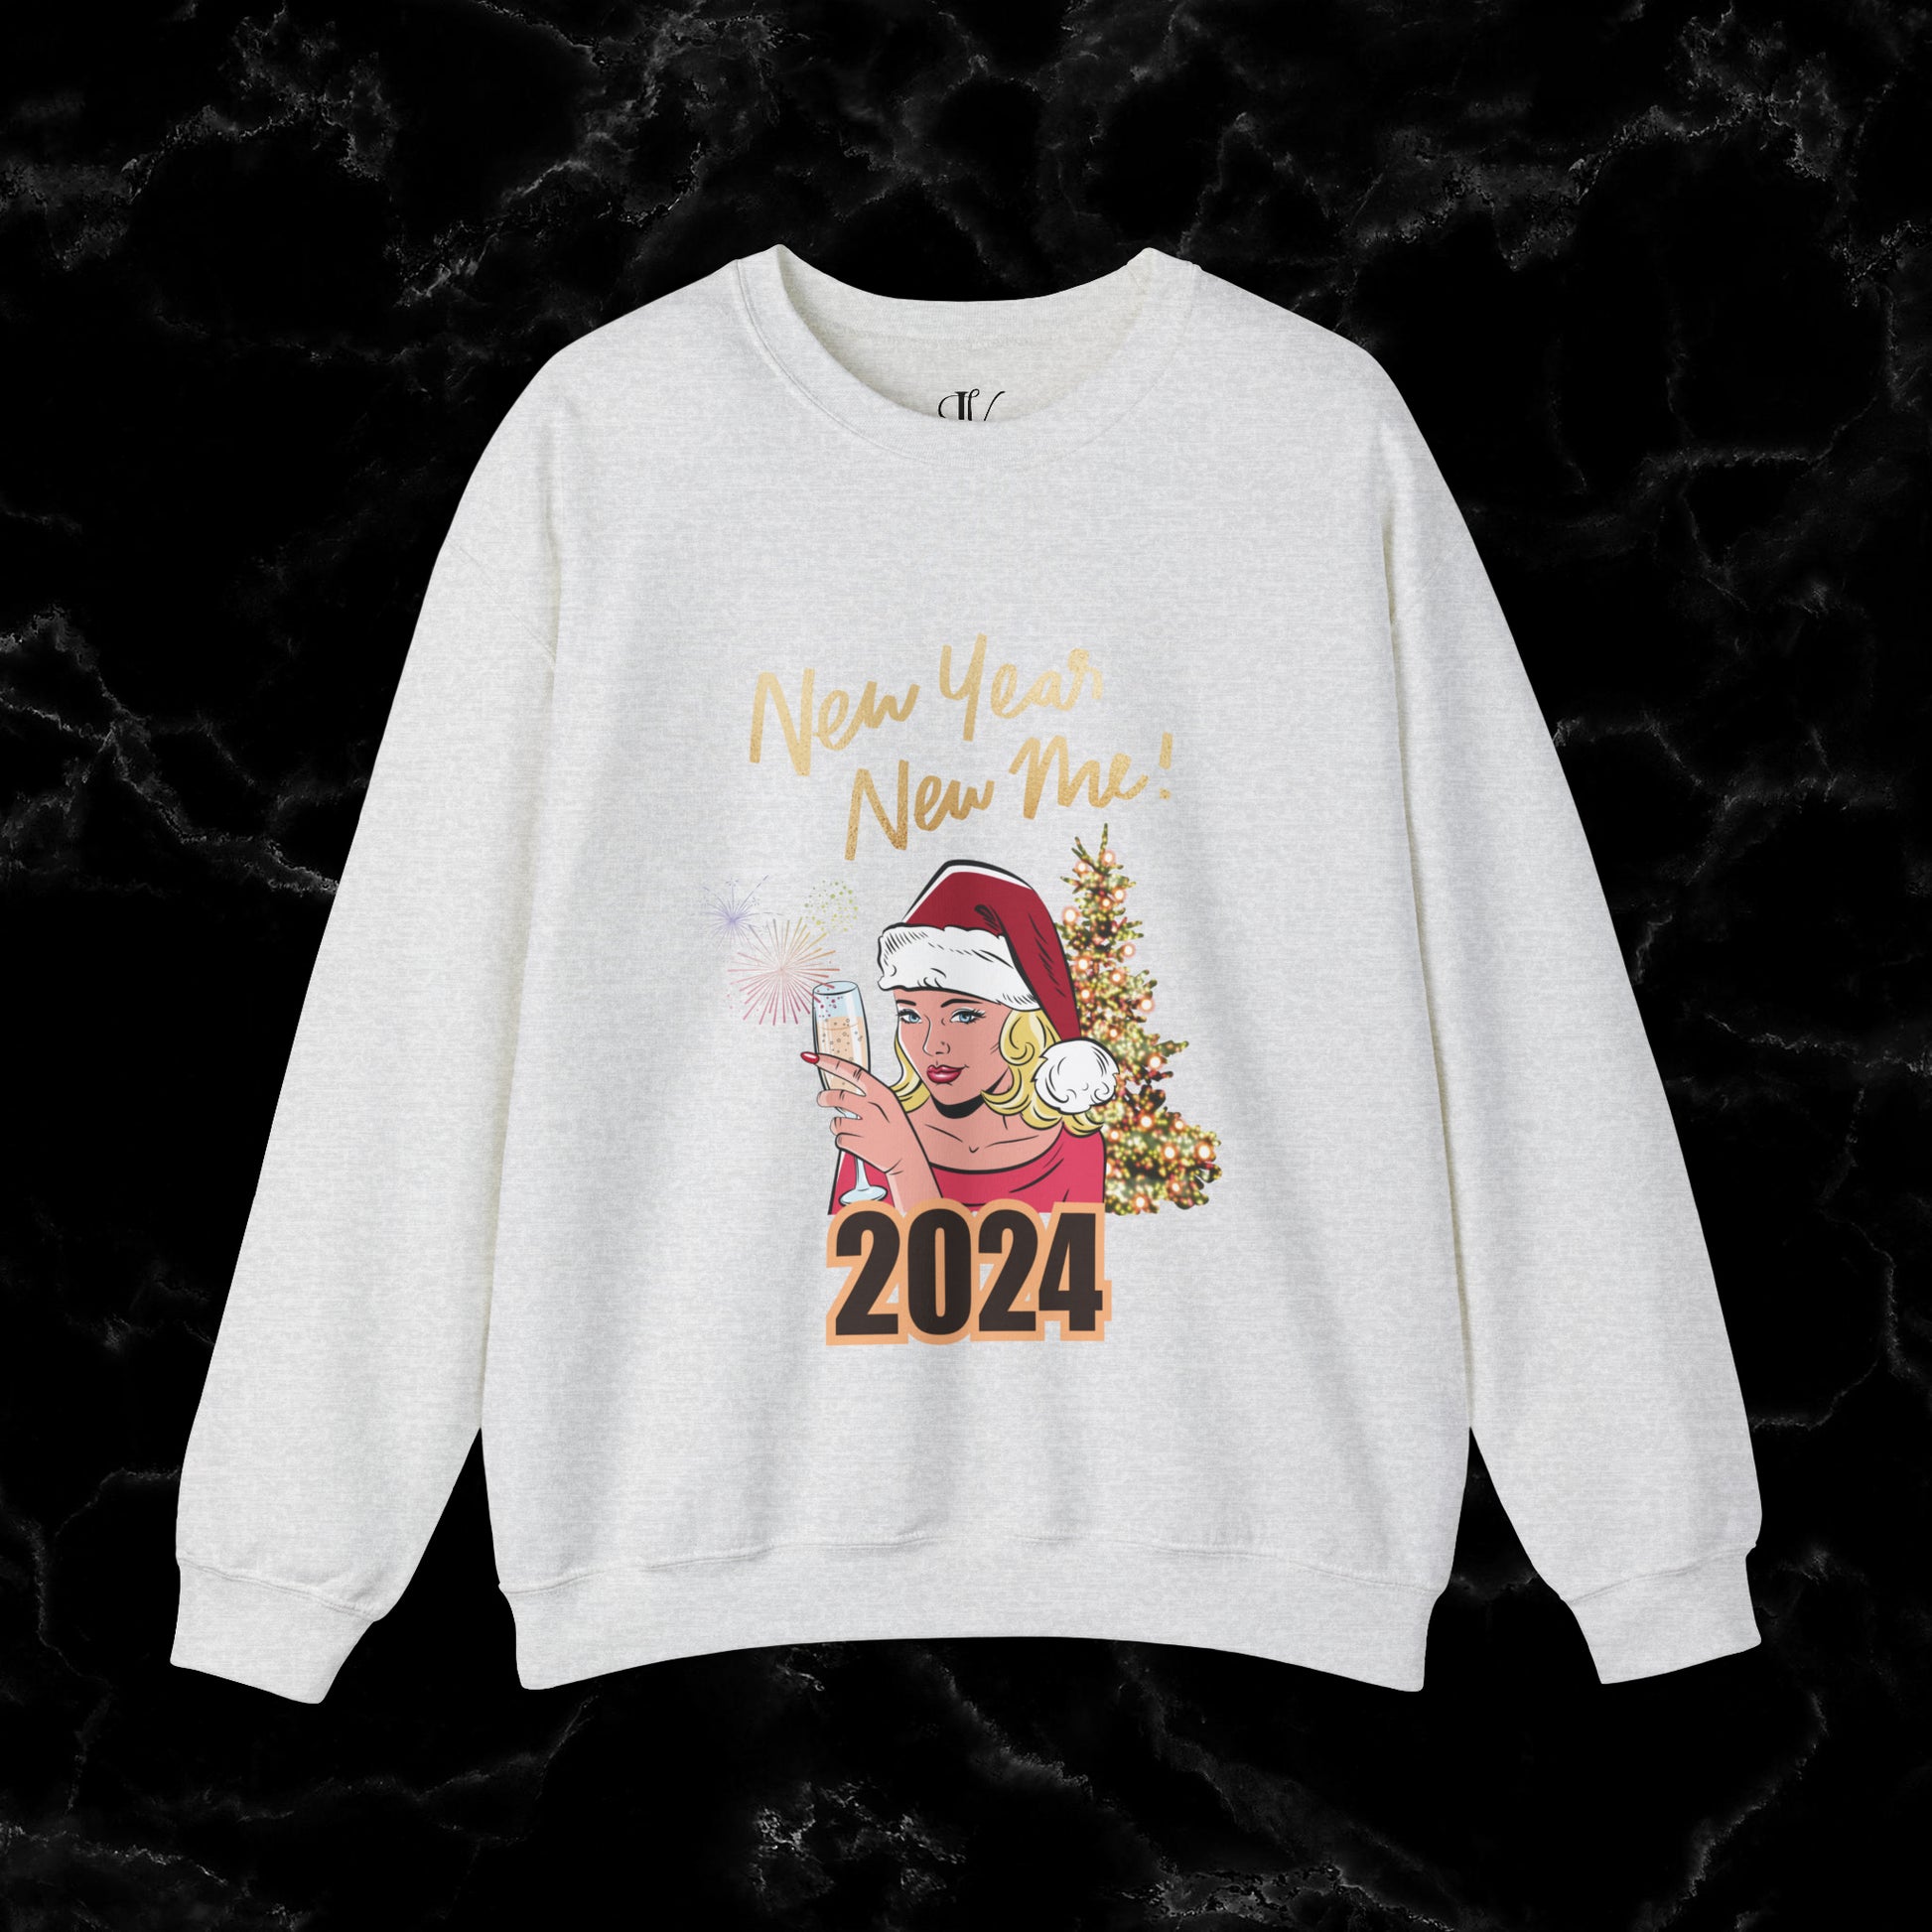 New Year New Me Sweatshirt - Motivational, Inspirational Resolutions Shirt, Christmas Family Tee Sweatshirt S Ash 